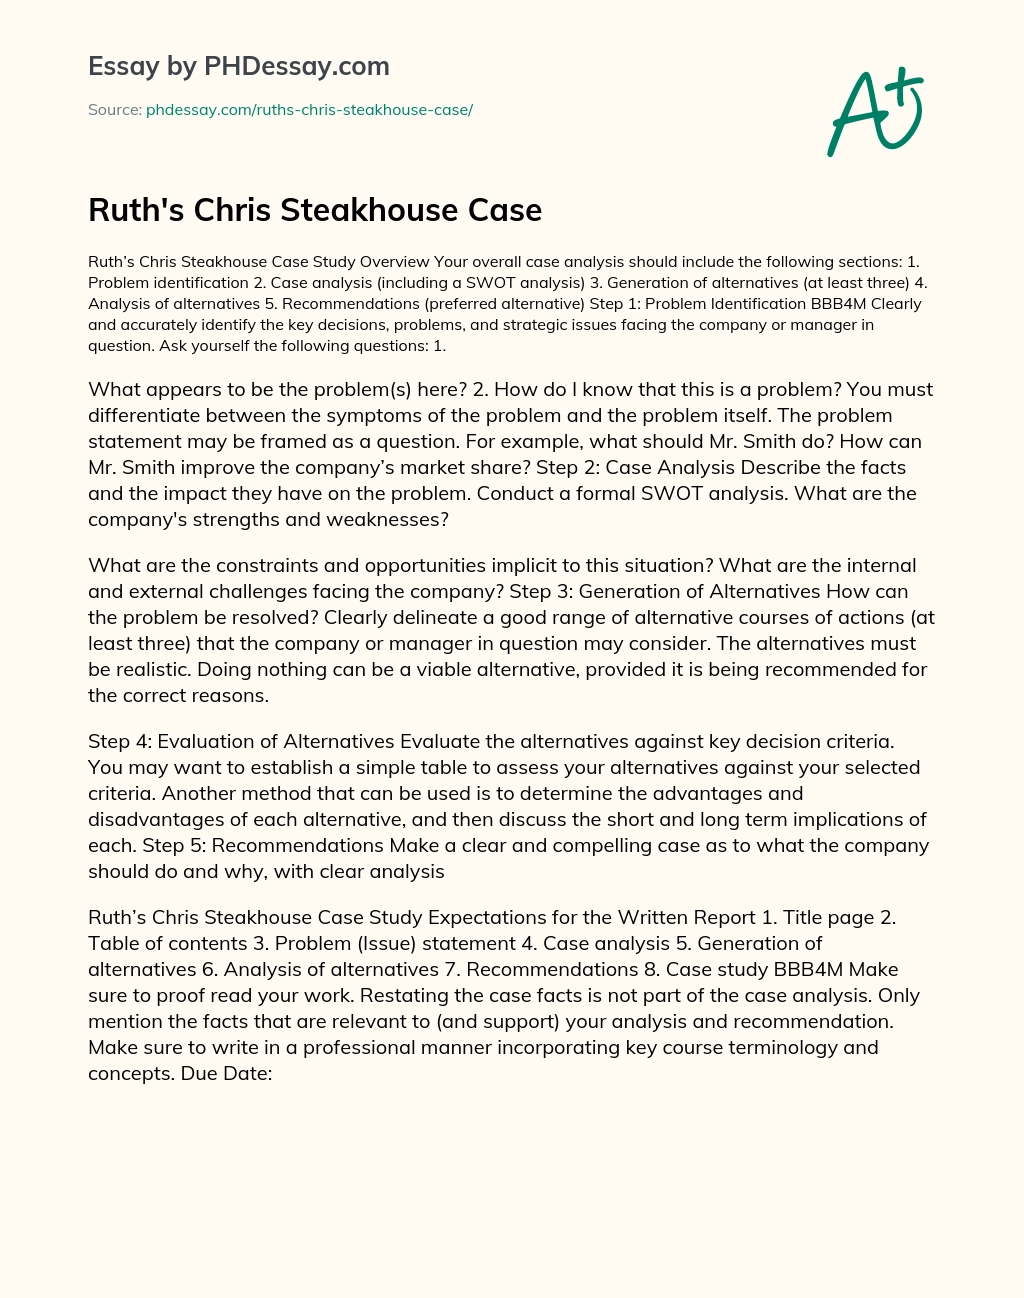 Ruth’s Chris Steakhouse Case essay